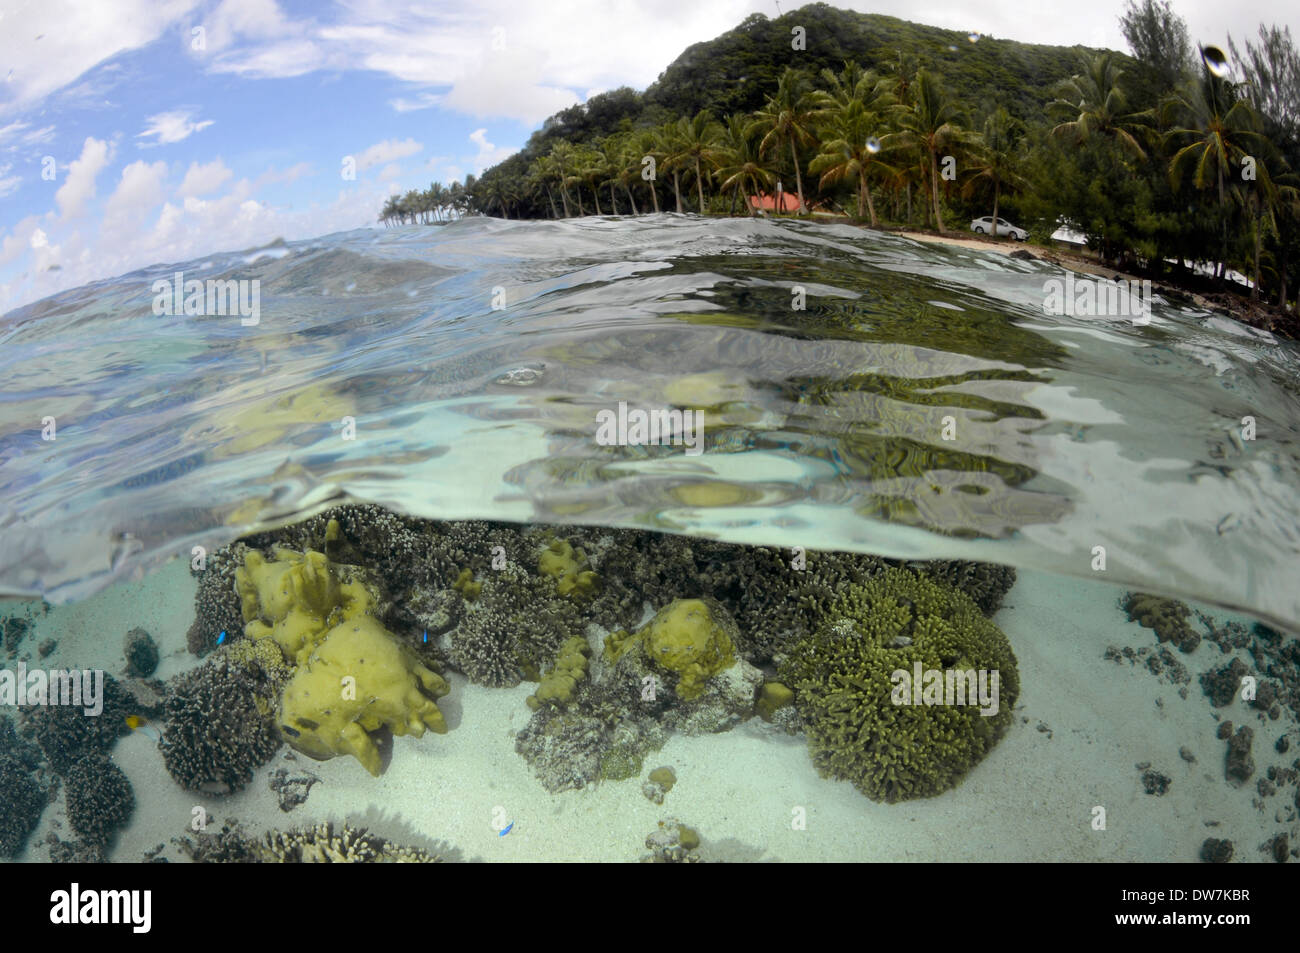 Shallow coral reef with several Acropora and Porites species, Fagaitua Bay, Pago Pago, Tutuila Island, American Samoa Stock Photo